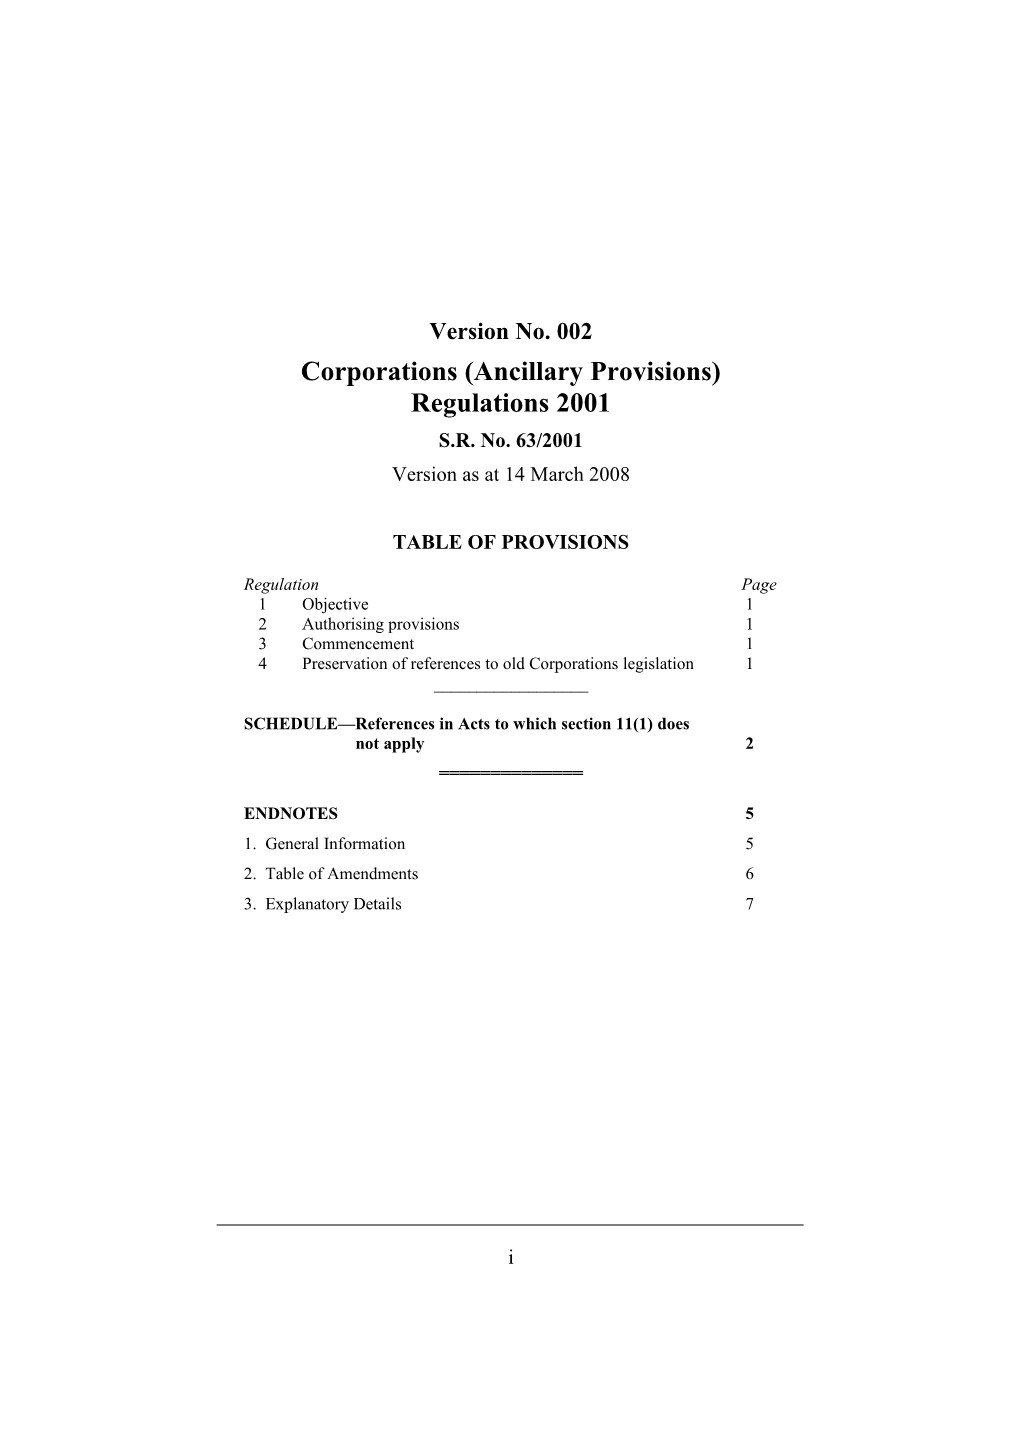 Corporations (Ancillary Provisions) Regulations 2001